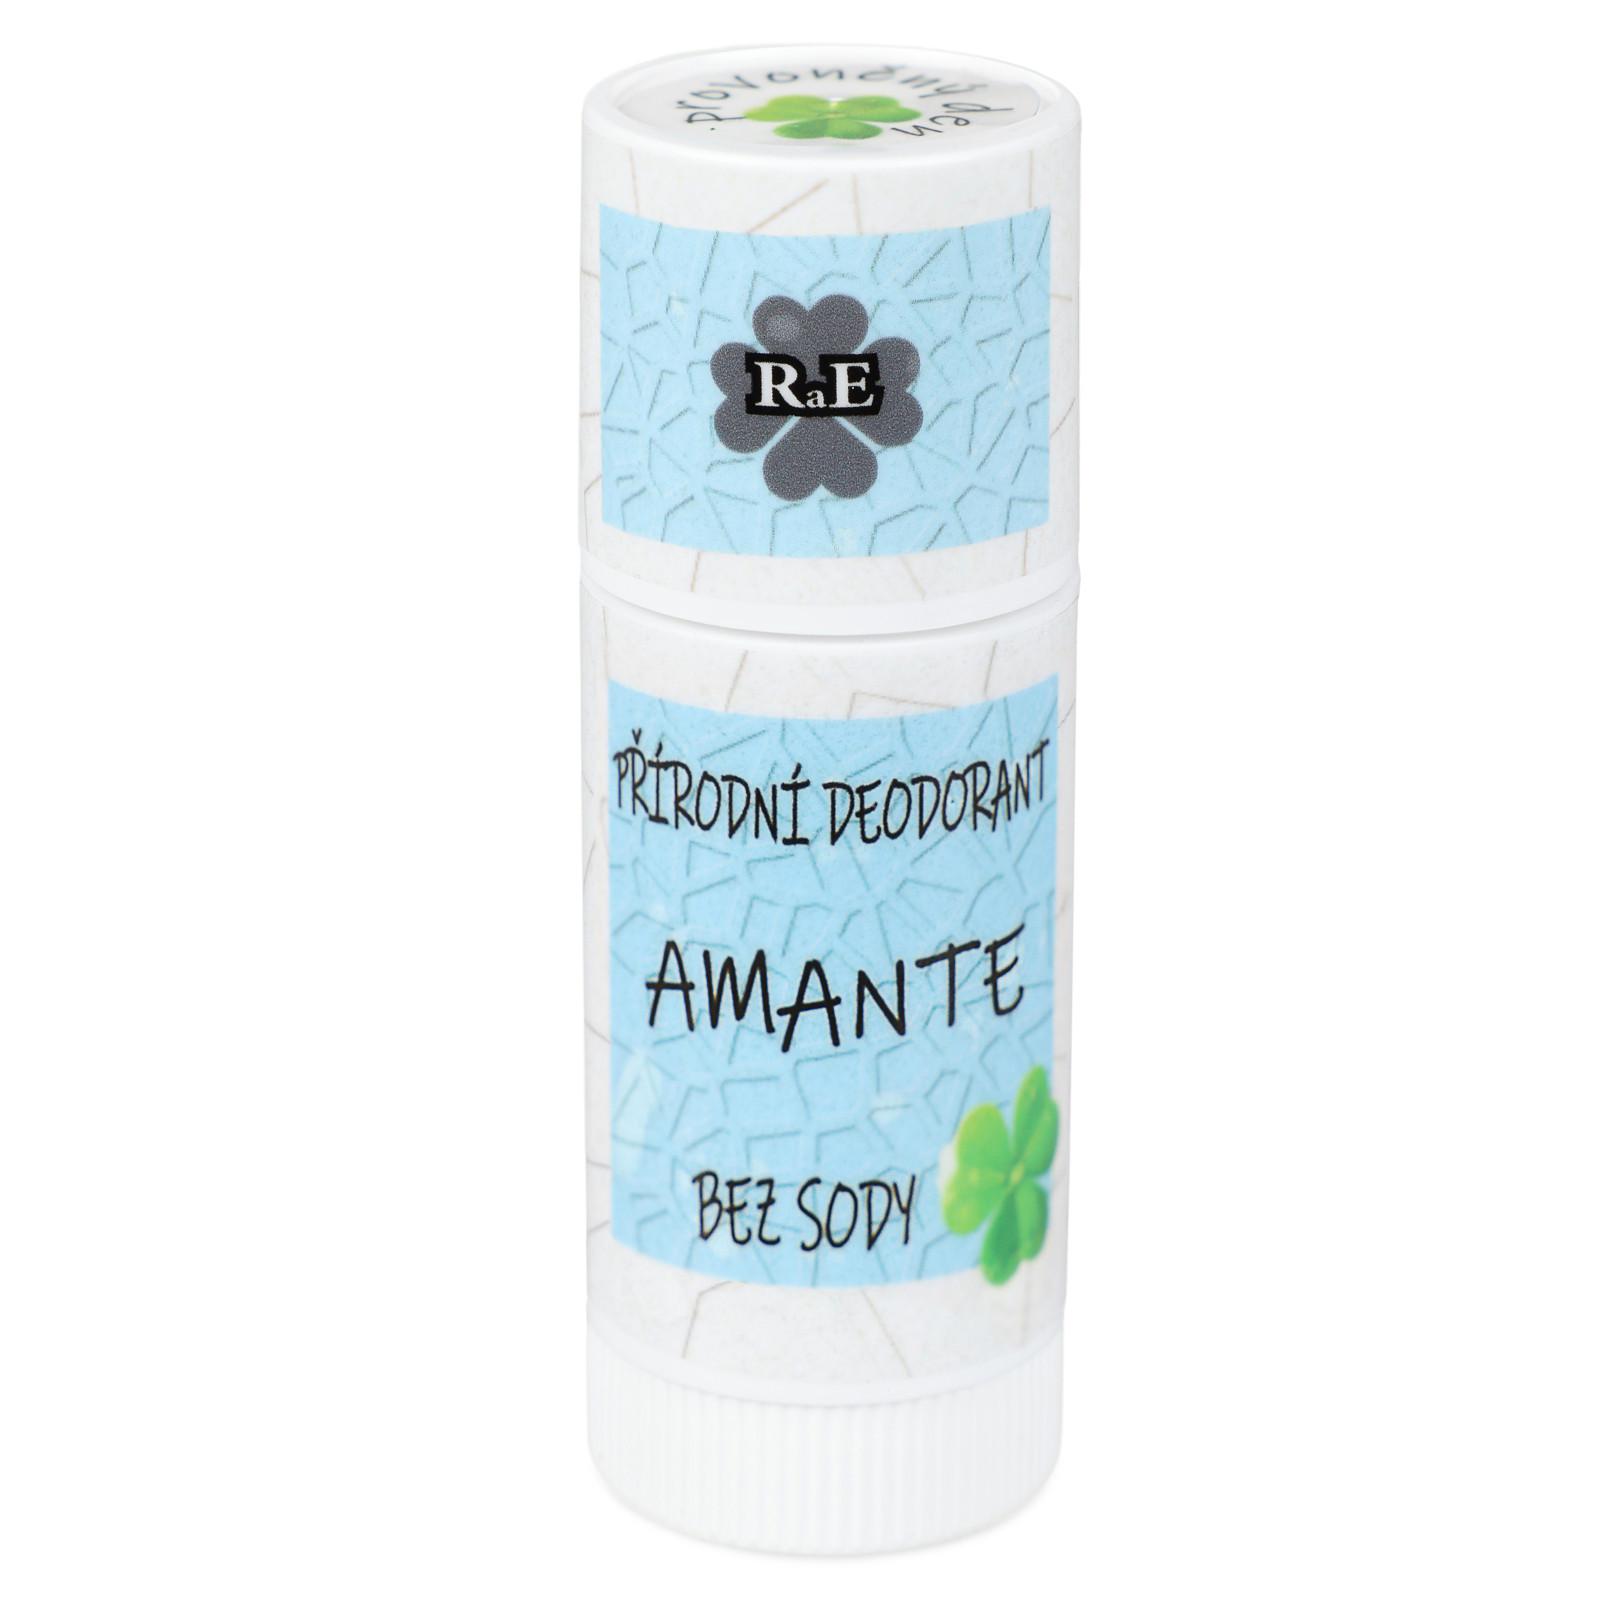 RaE Přírodní bezsodý deodorant Amante 25 ml